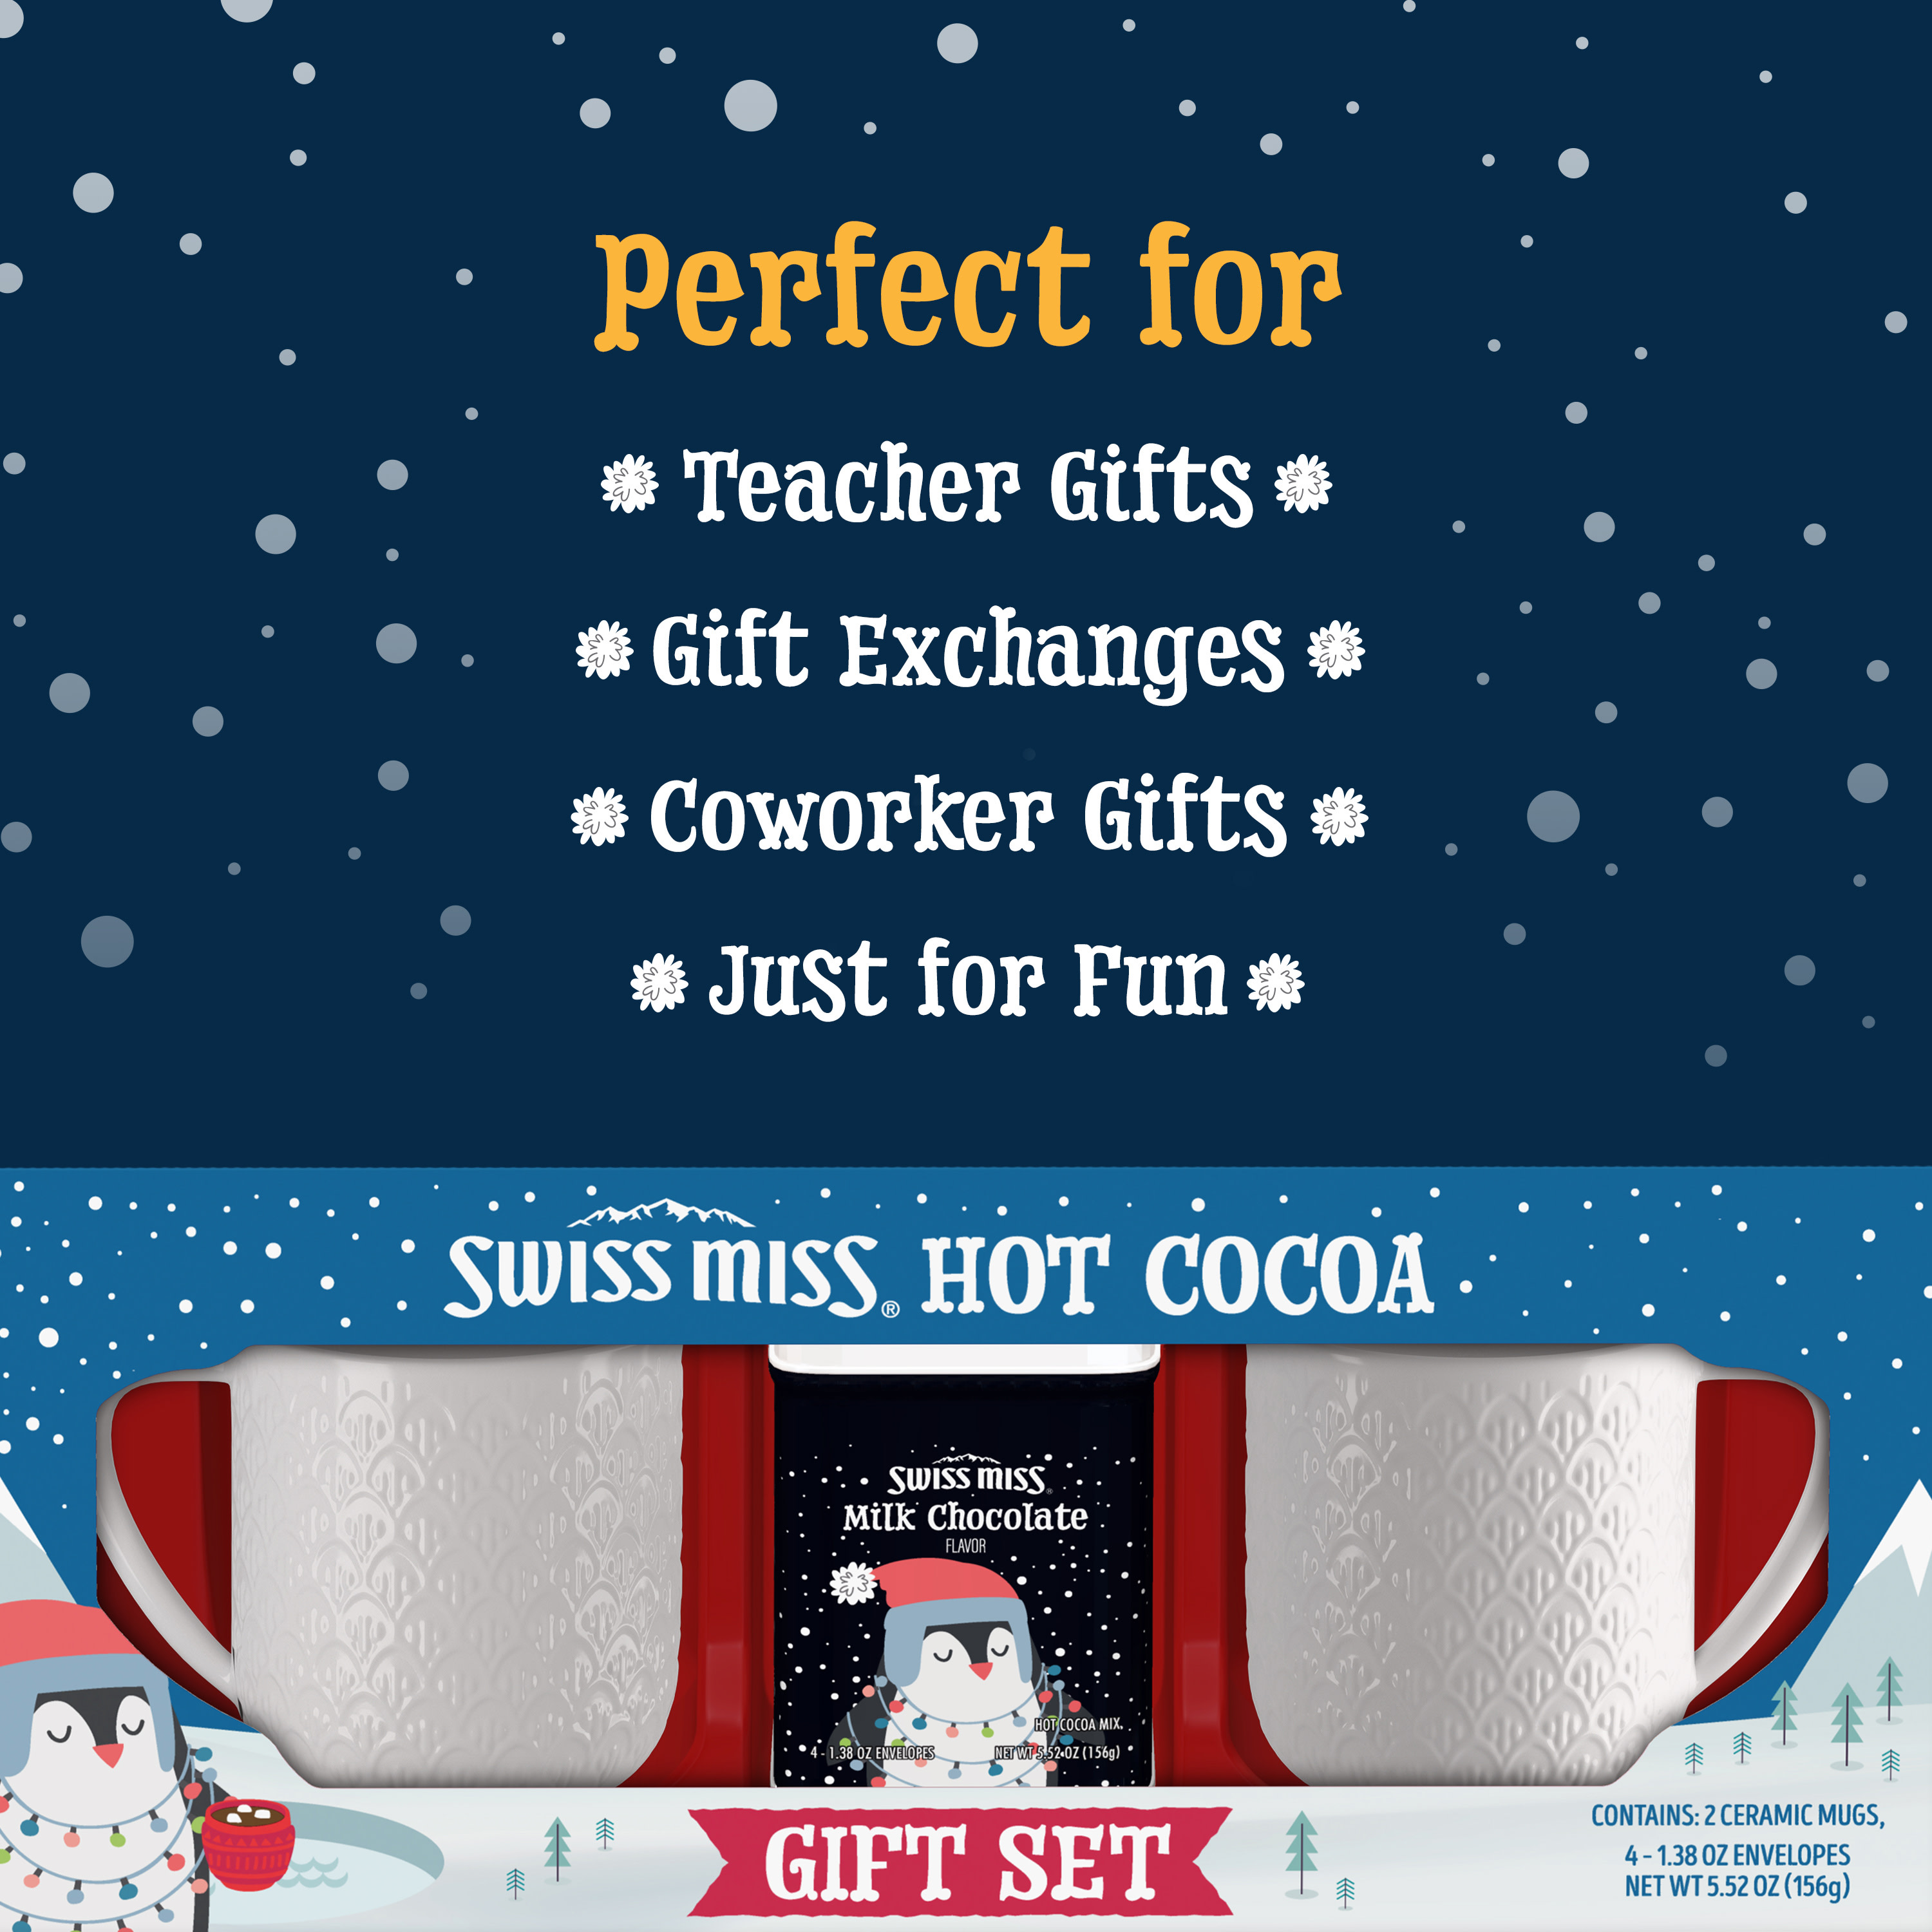 Swiss Miss Hot Cocoa and Ceramic Mug Gift Set, 5.52 oz. - image 4 of 7